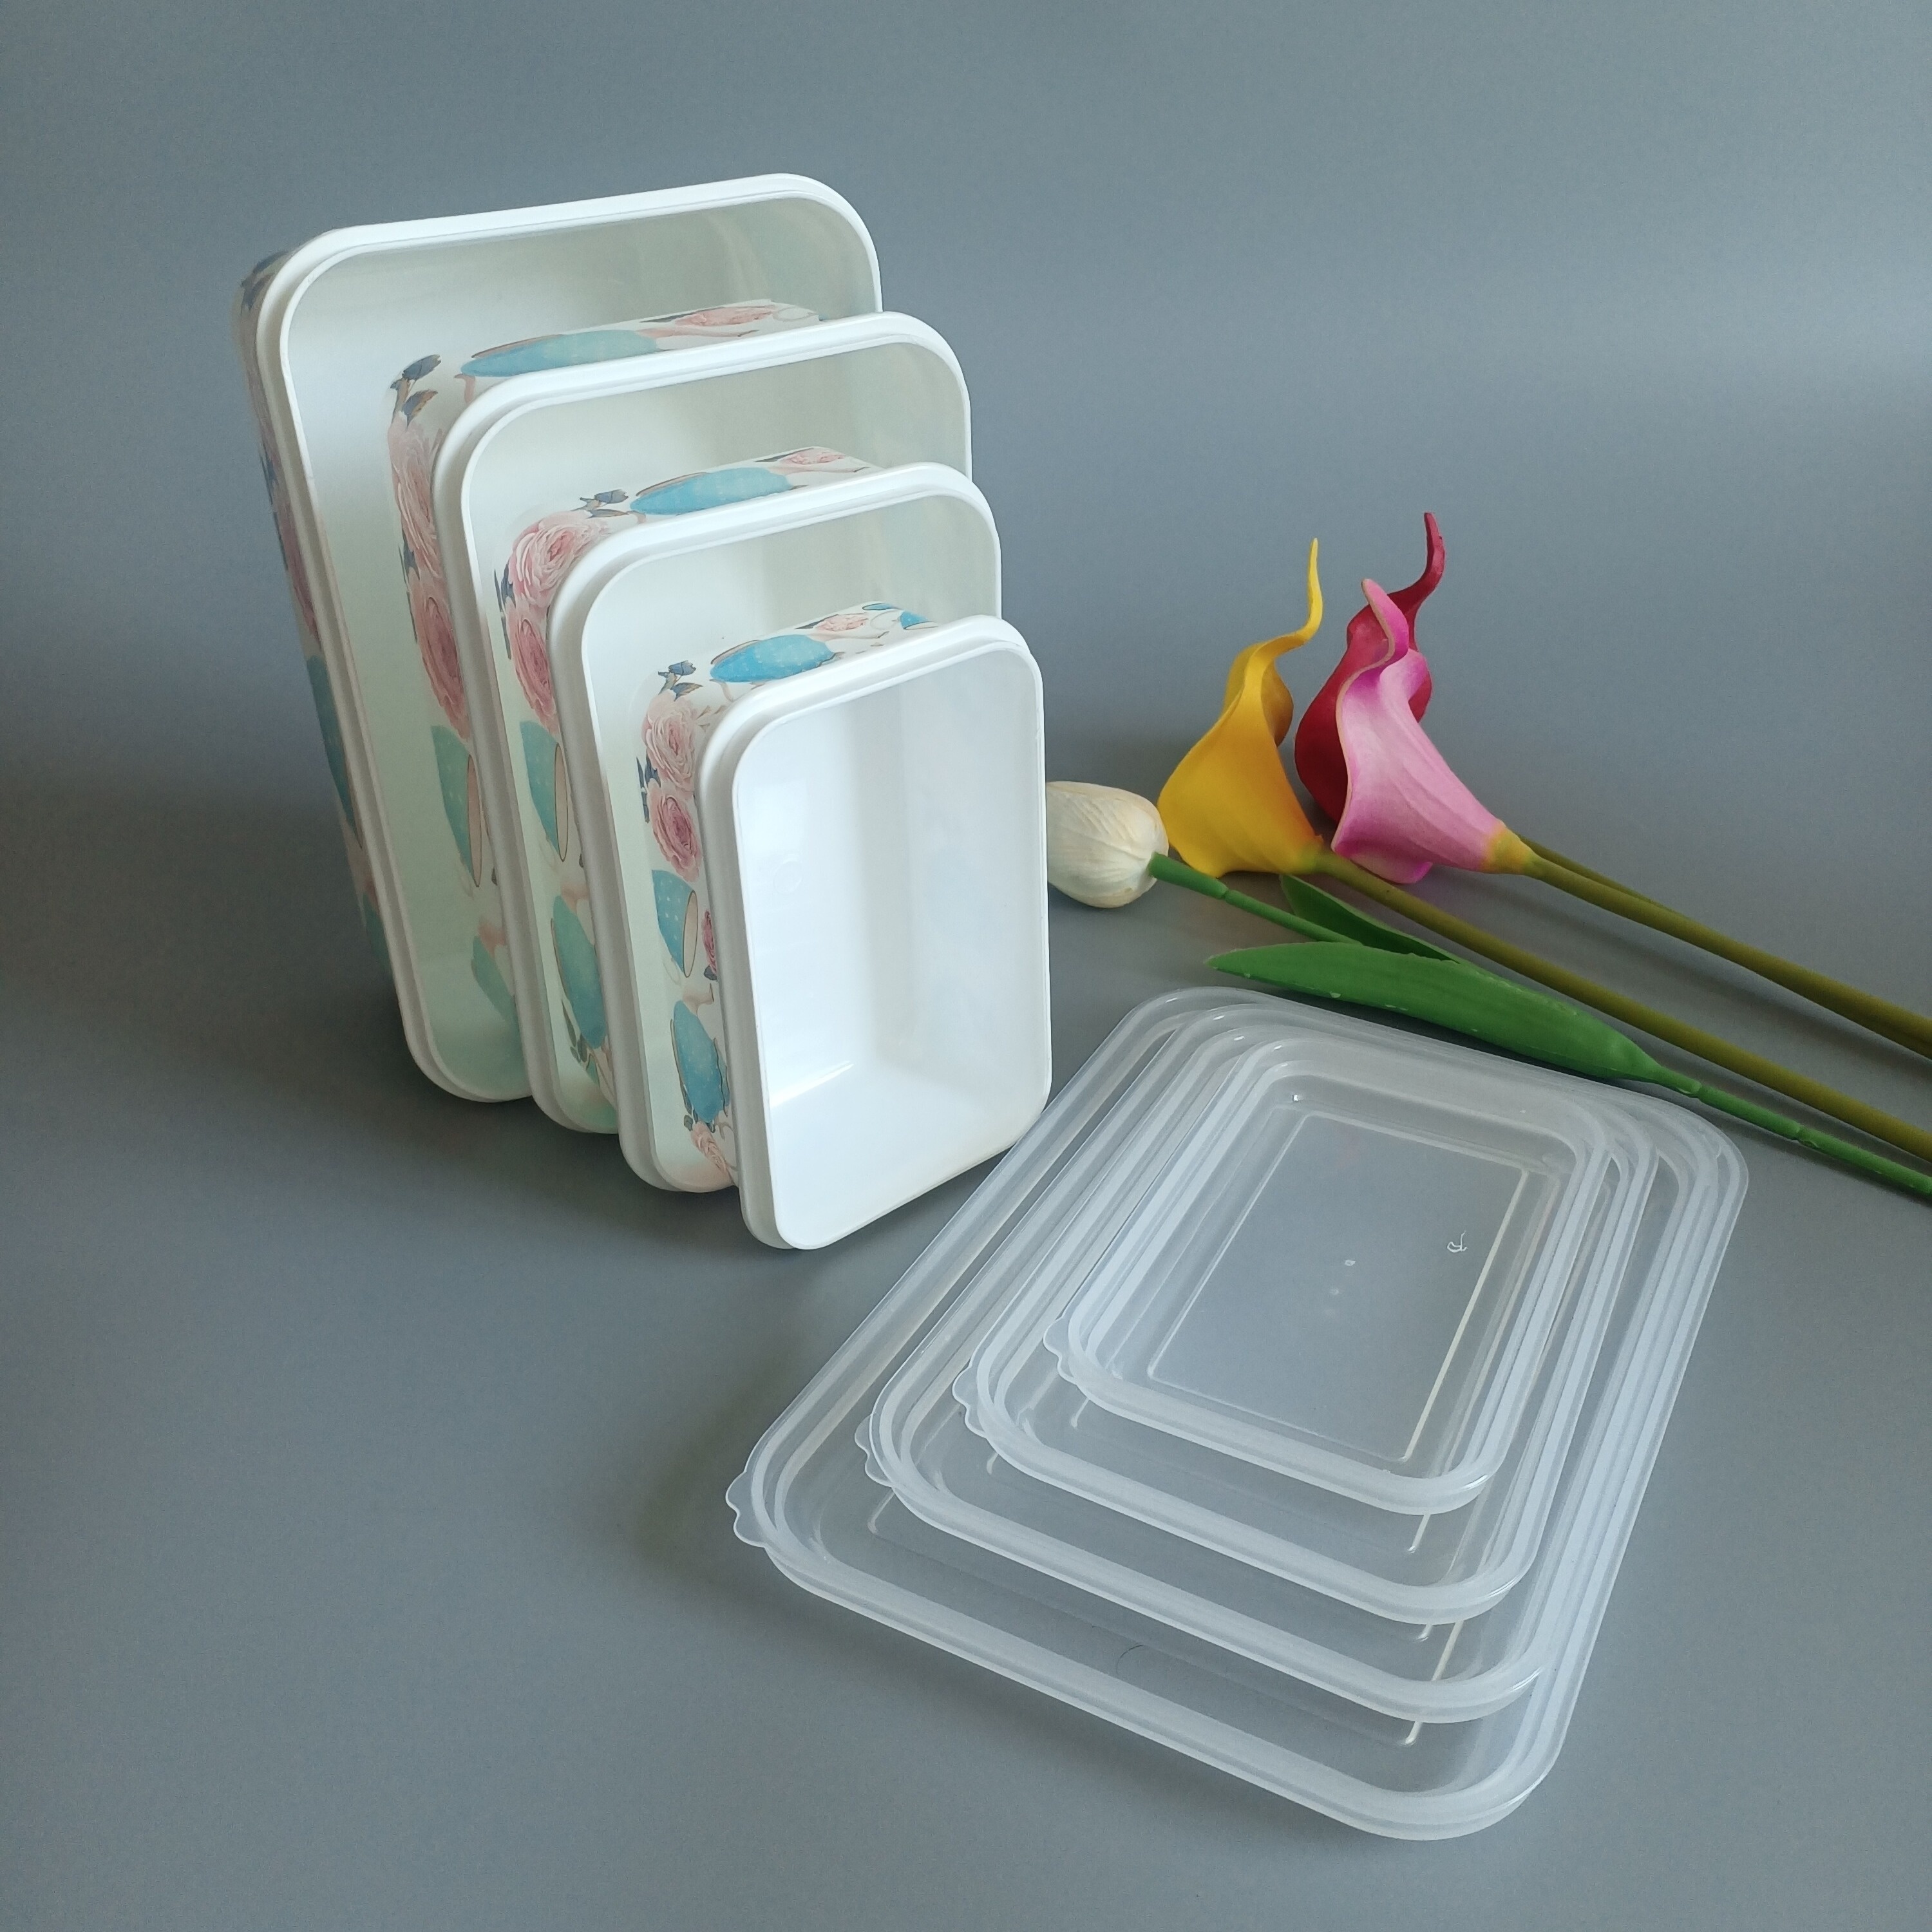 3 piece Decorative Floral Plastic Food Storage Multi Purpose Containers